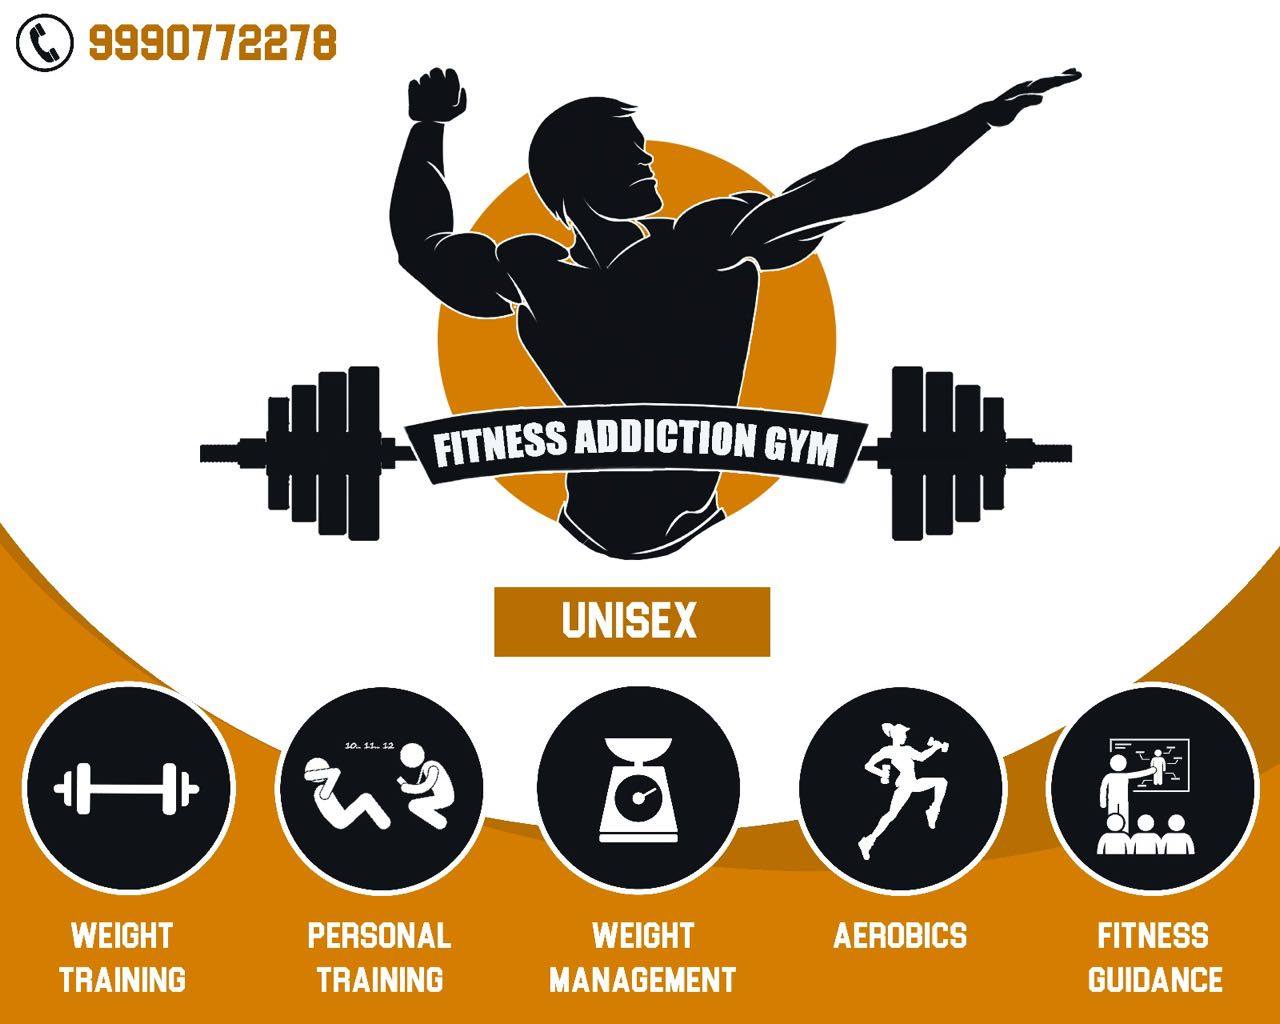 Fitness addiction gym - Logo